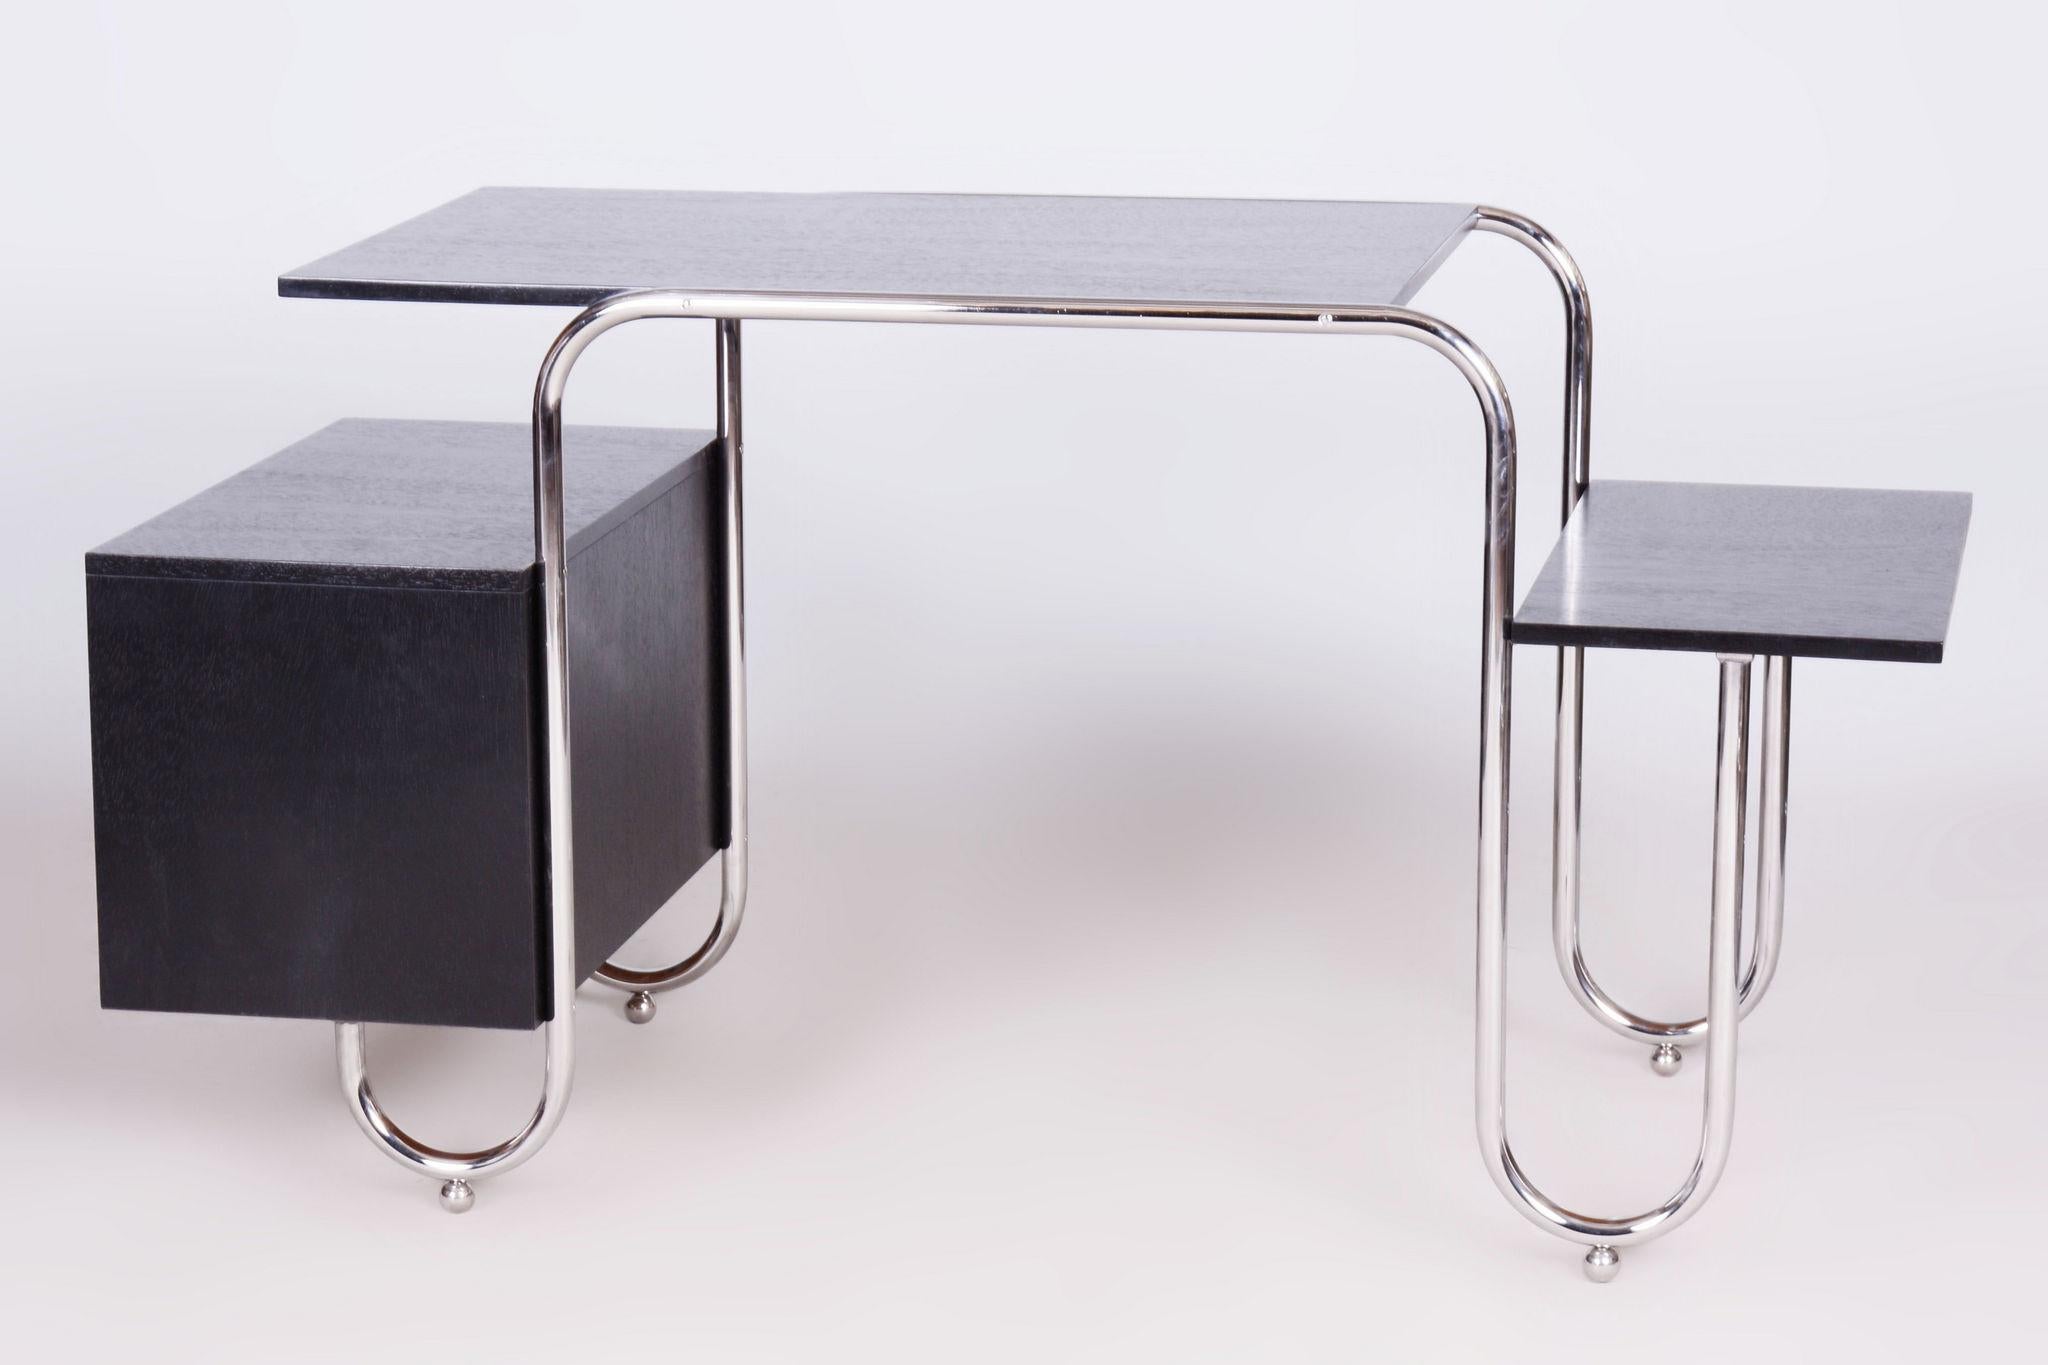 Restored Bauhaus Oak Writing Desk, Robert Slezak, Chrome, Steel, Czechia, 1930s For Sale 1